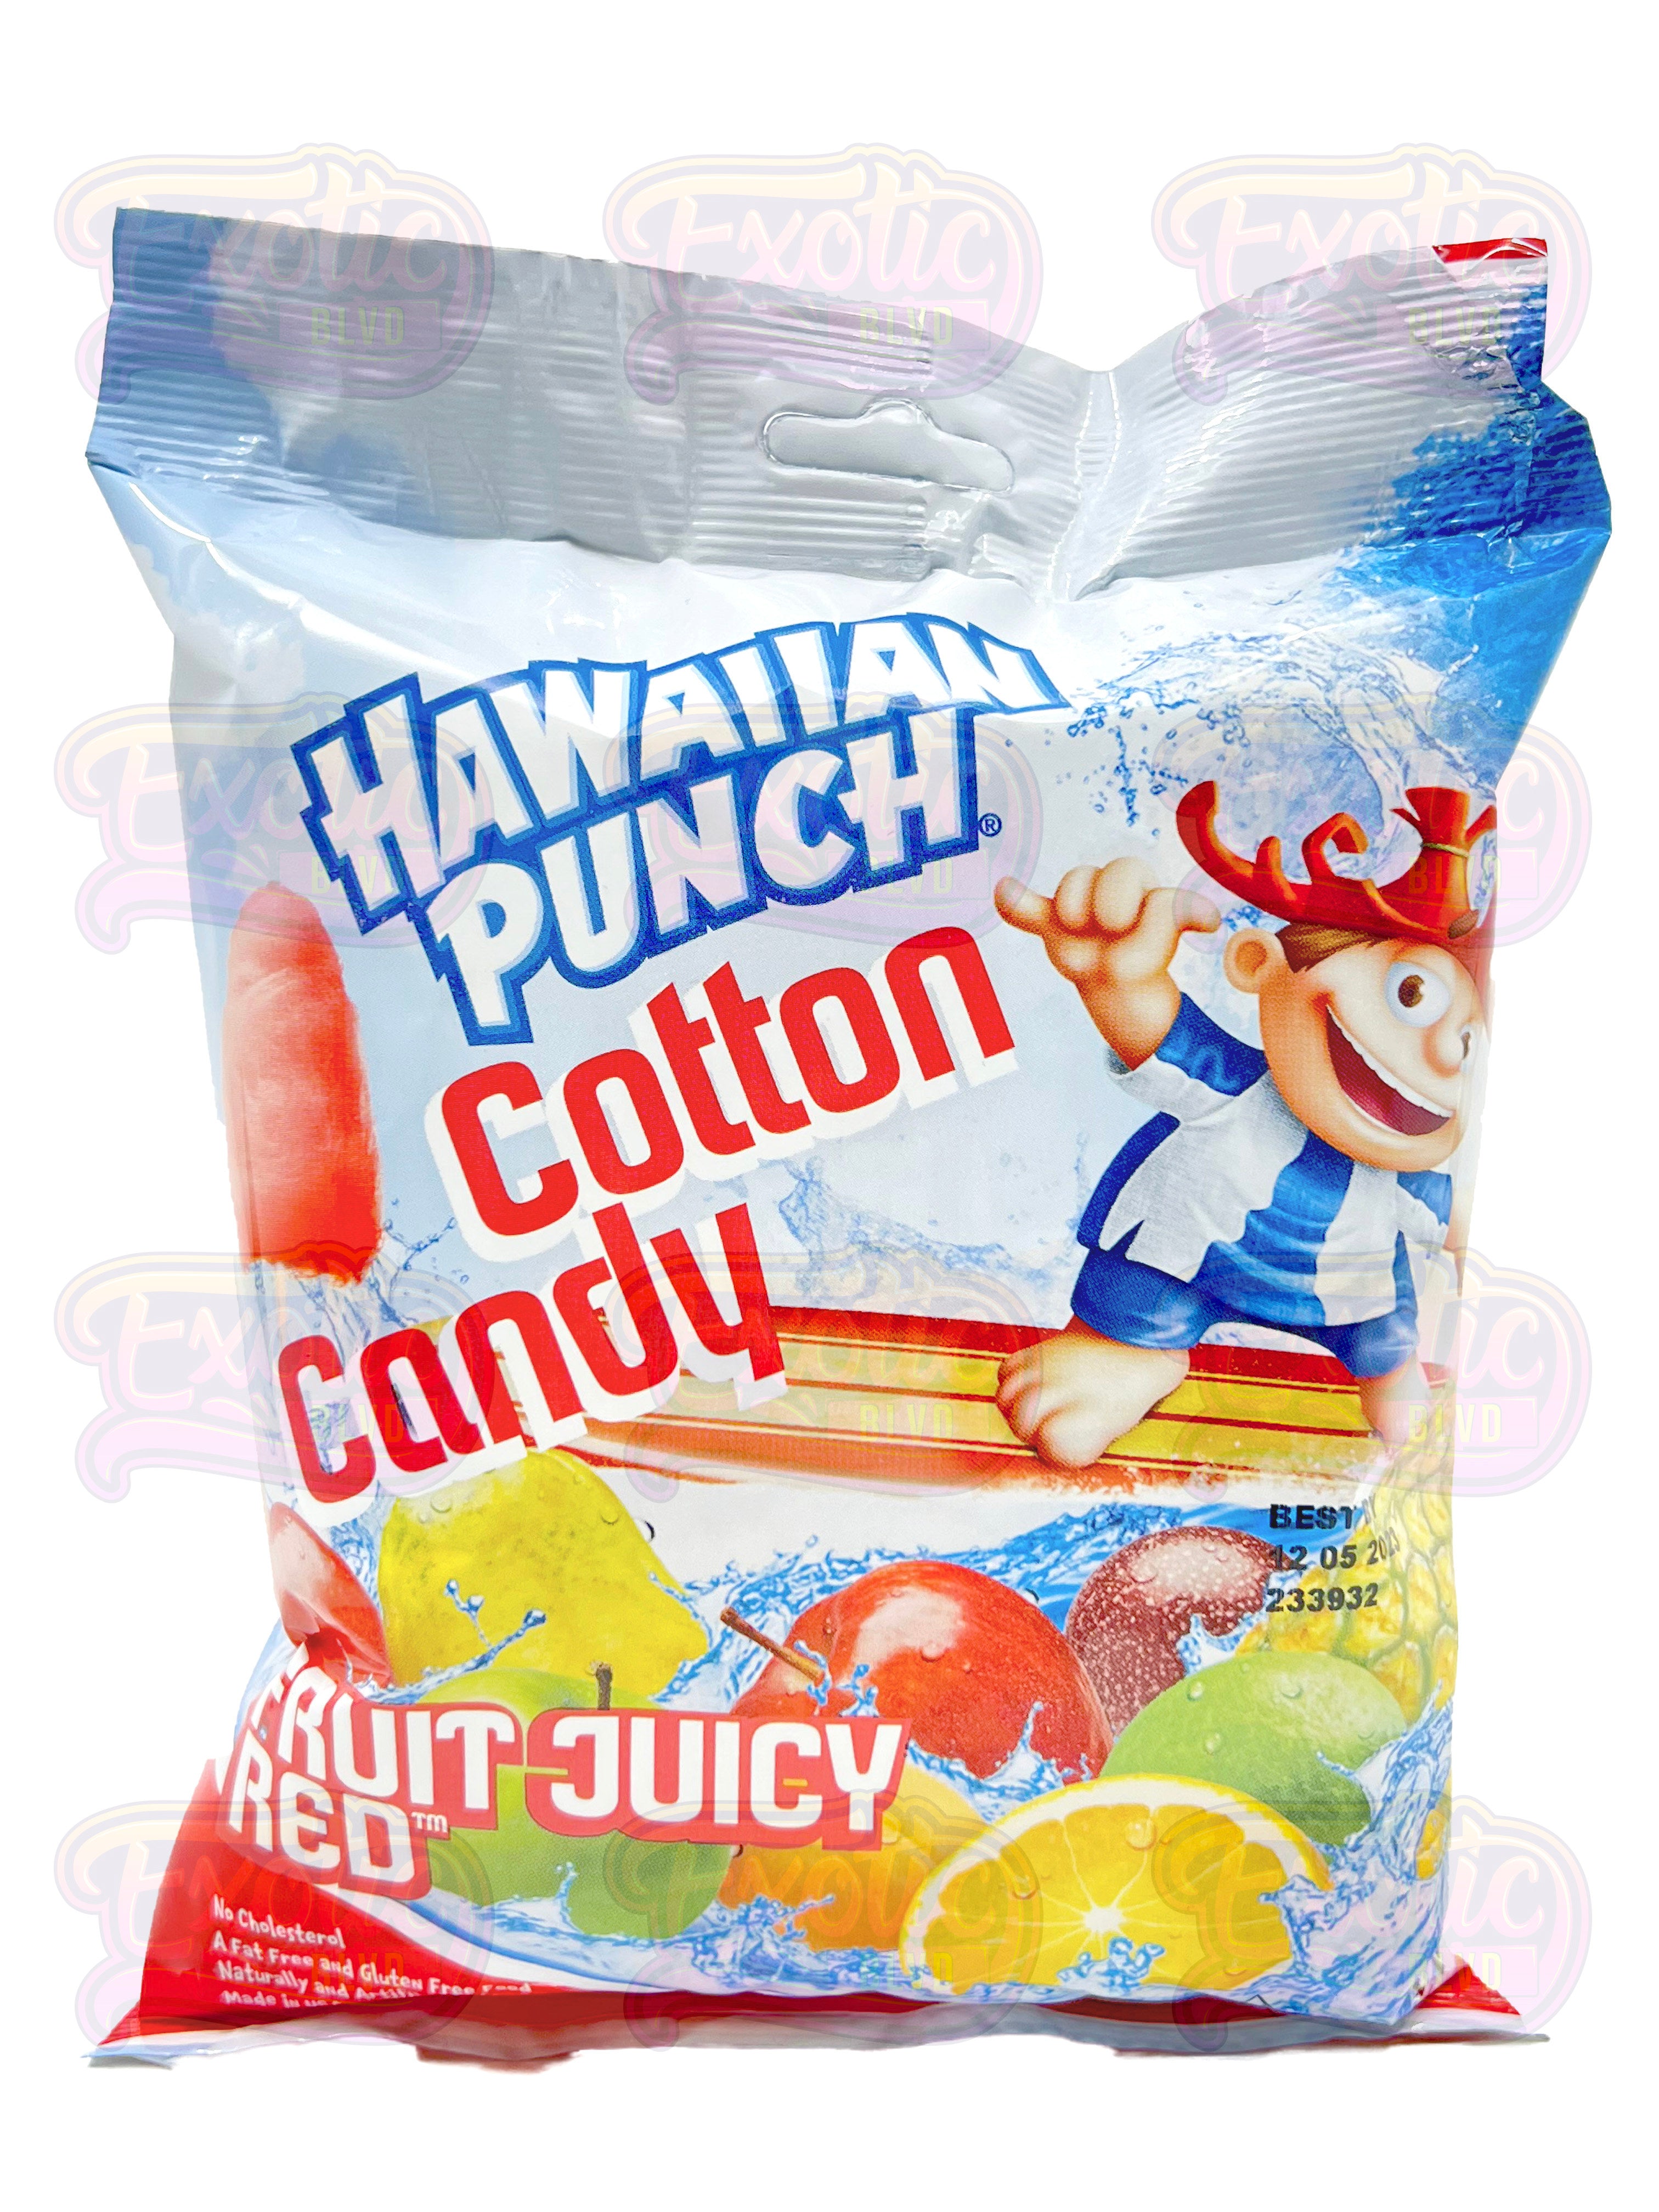 Hawaiian Punch Cotton Candy, Fruit Juicy Red - 1.5 bag